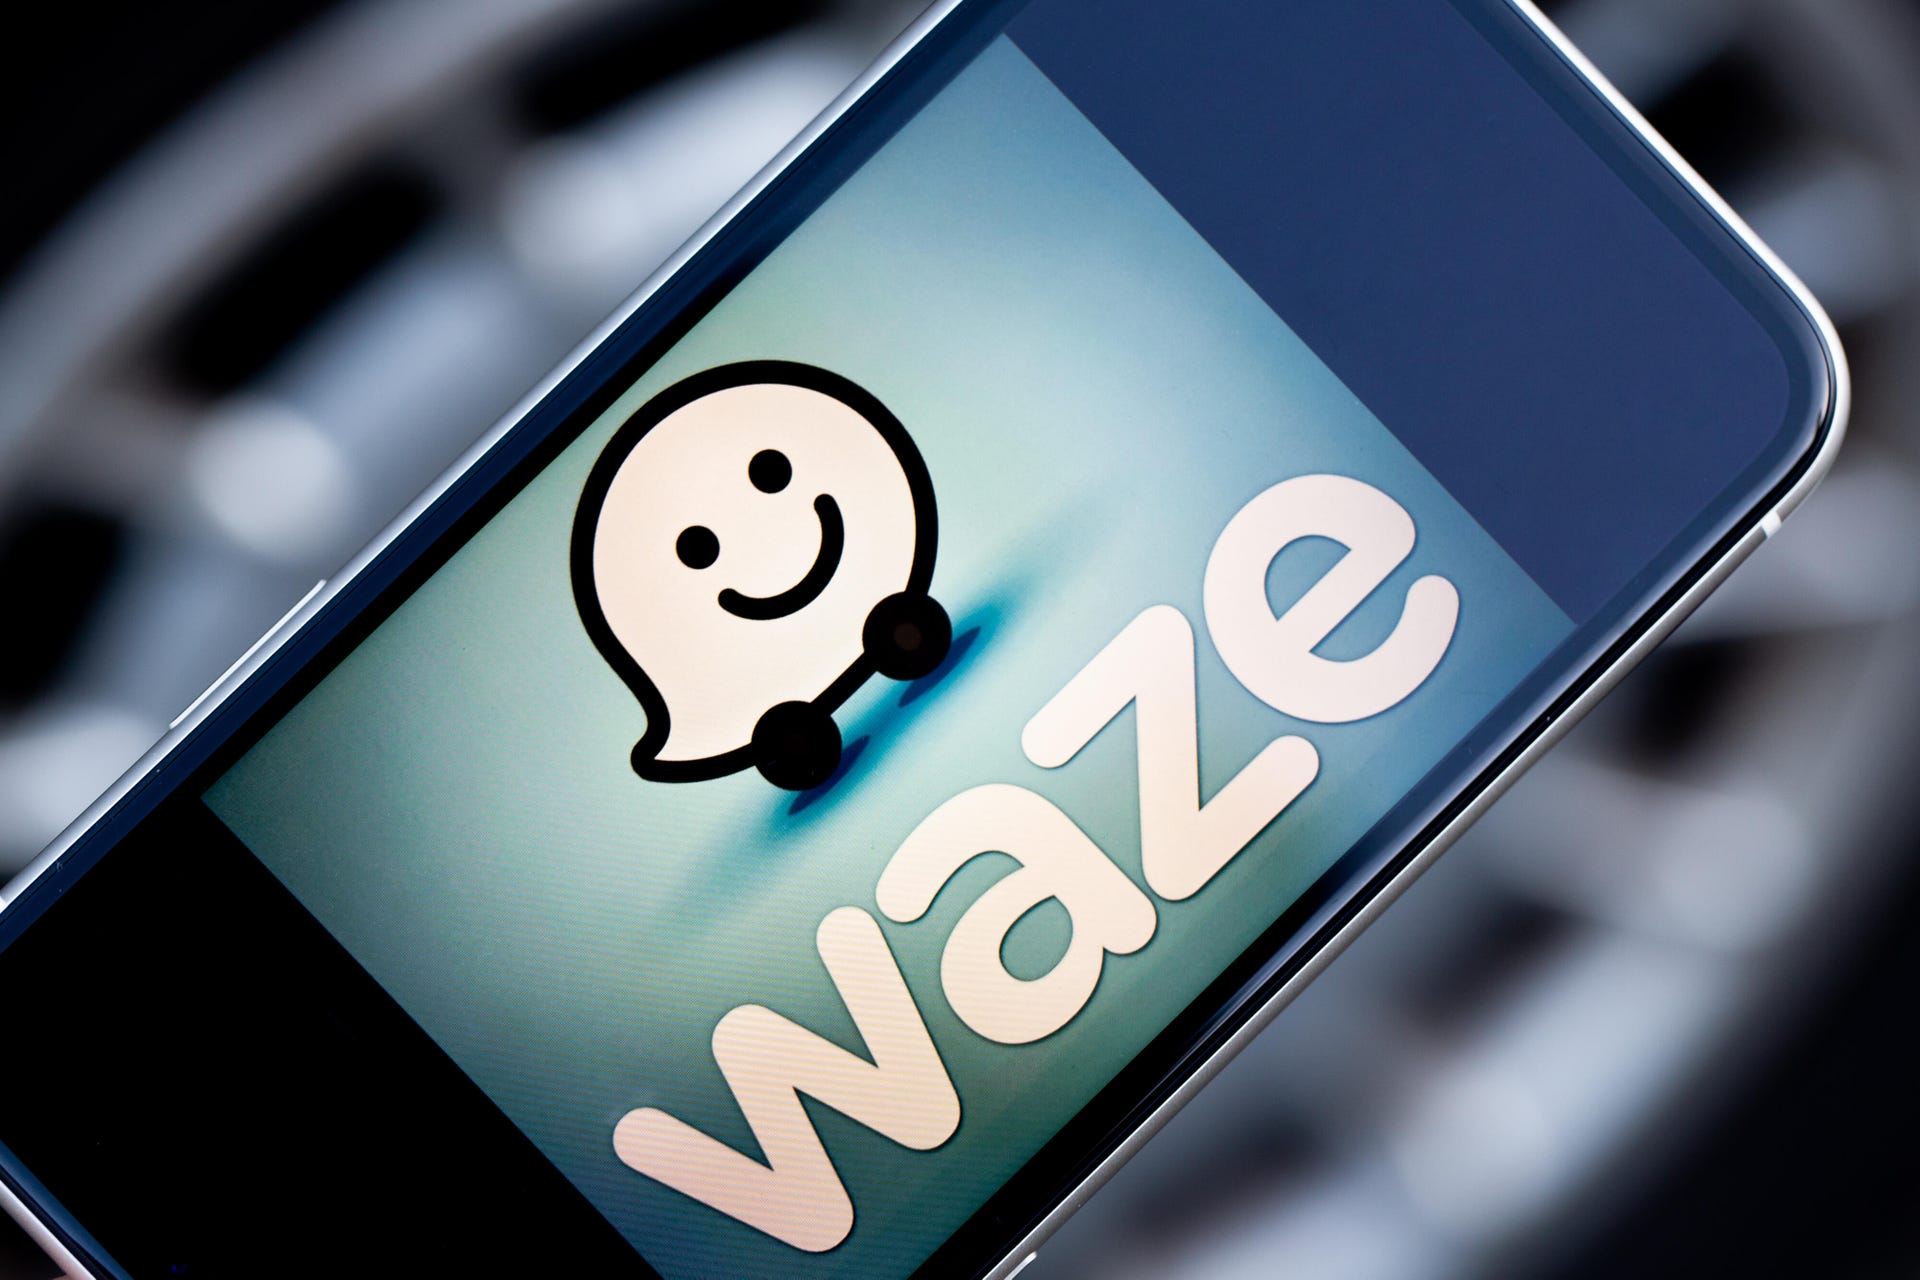 waze-logo-app-phone-car-1227